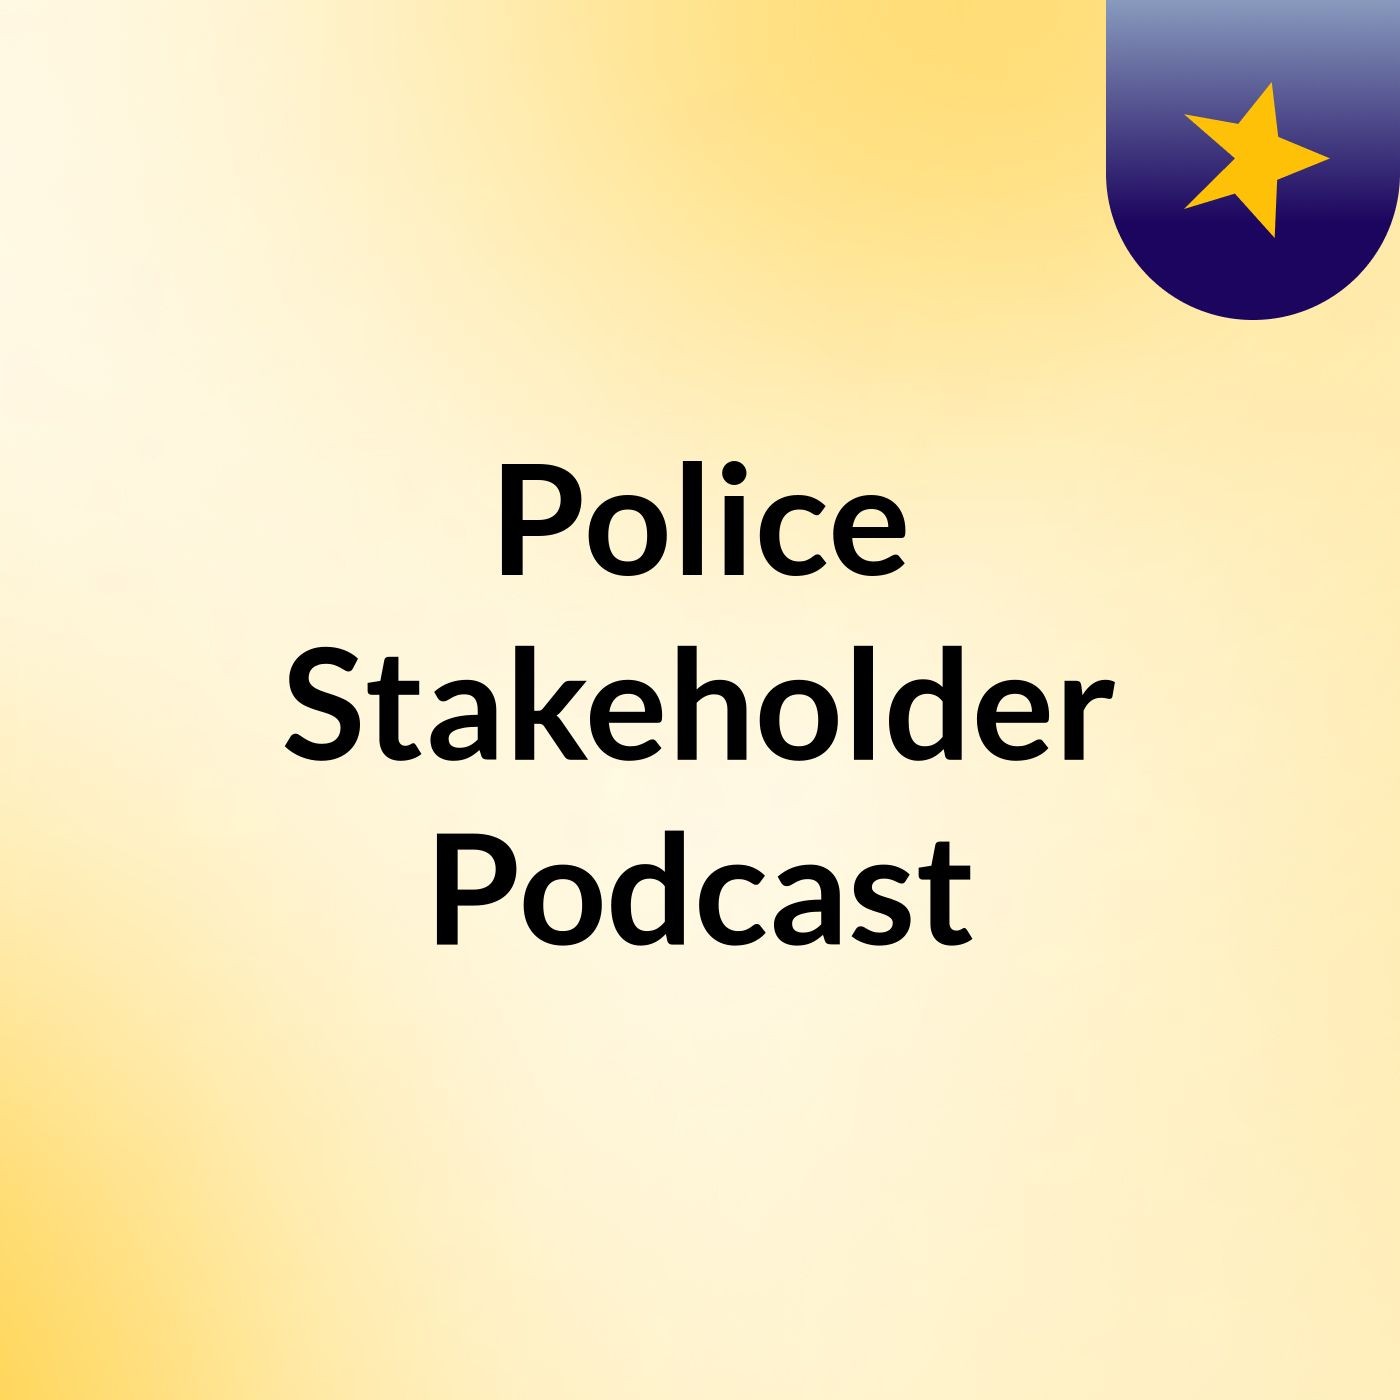 Police Stakeholder Podcast